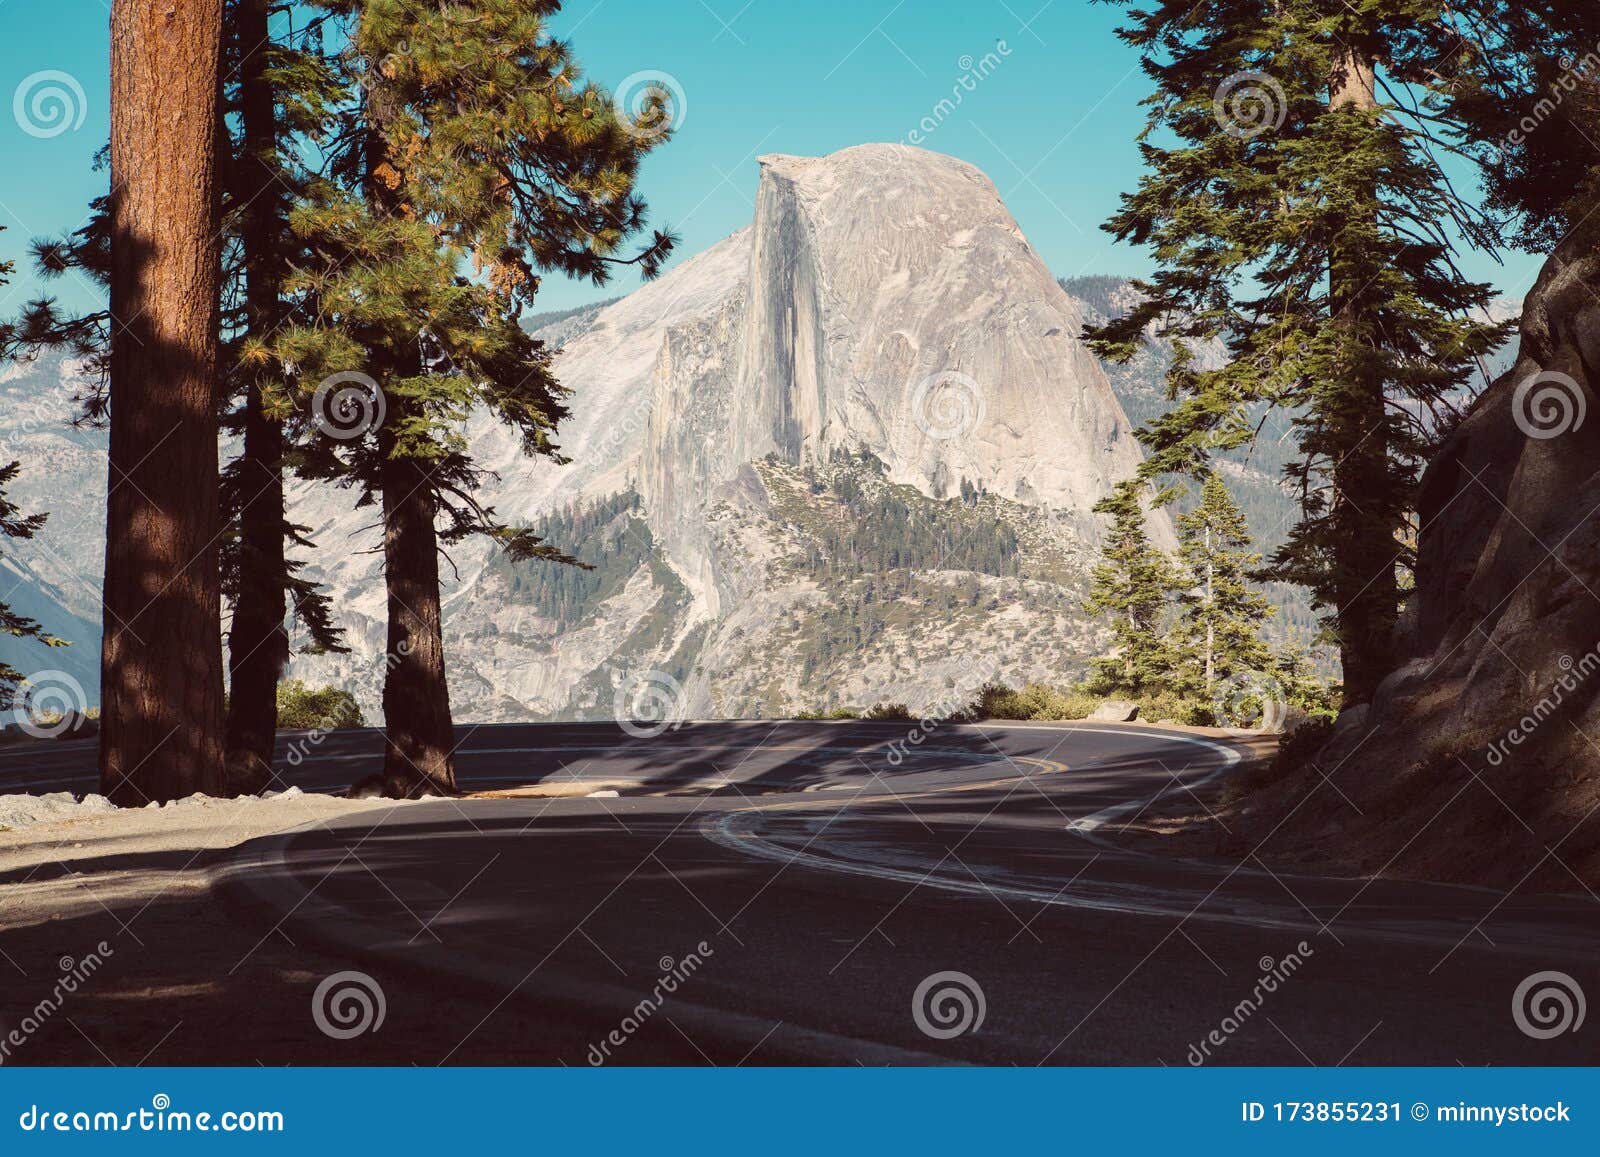 Yosemites Half Dome Sunset From Glacier Point Stock Photo